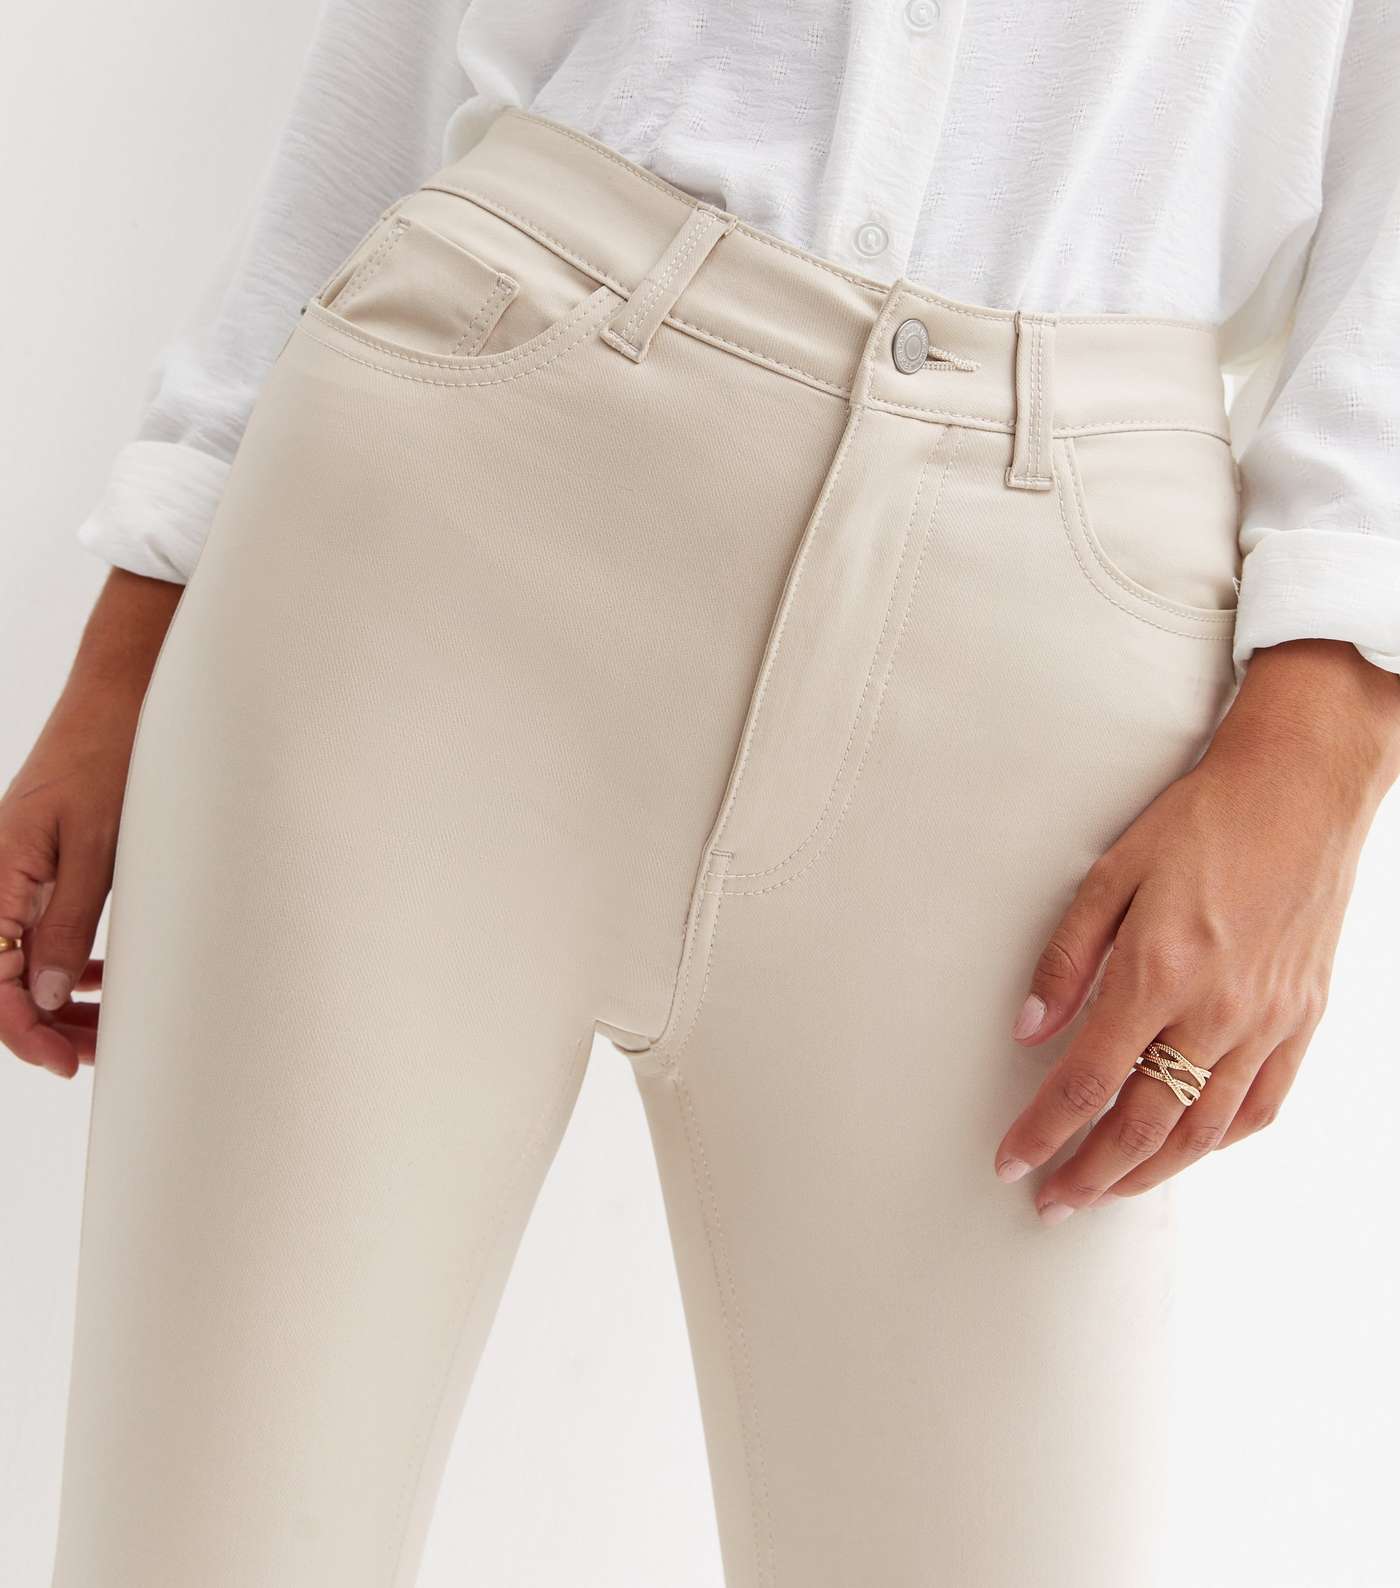 Off White Coated Leather-Look Lift & Shape Jenna Skinny Jeans Image 3